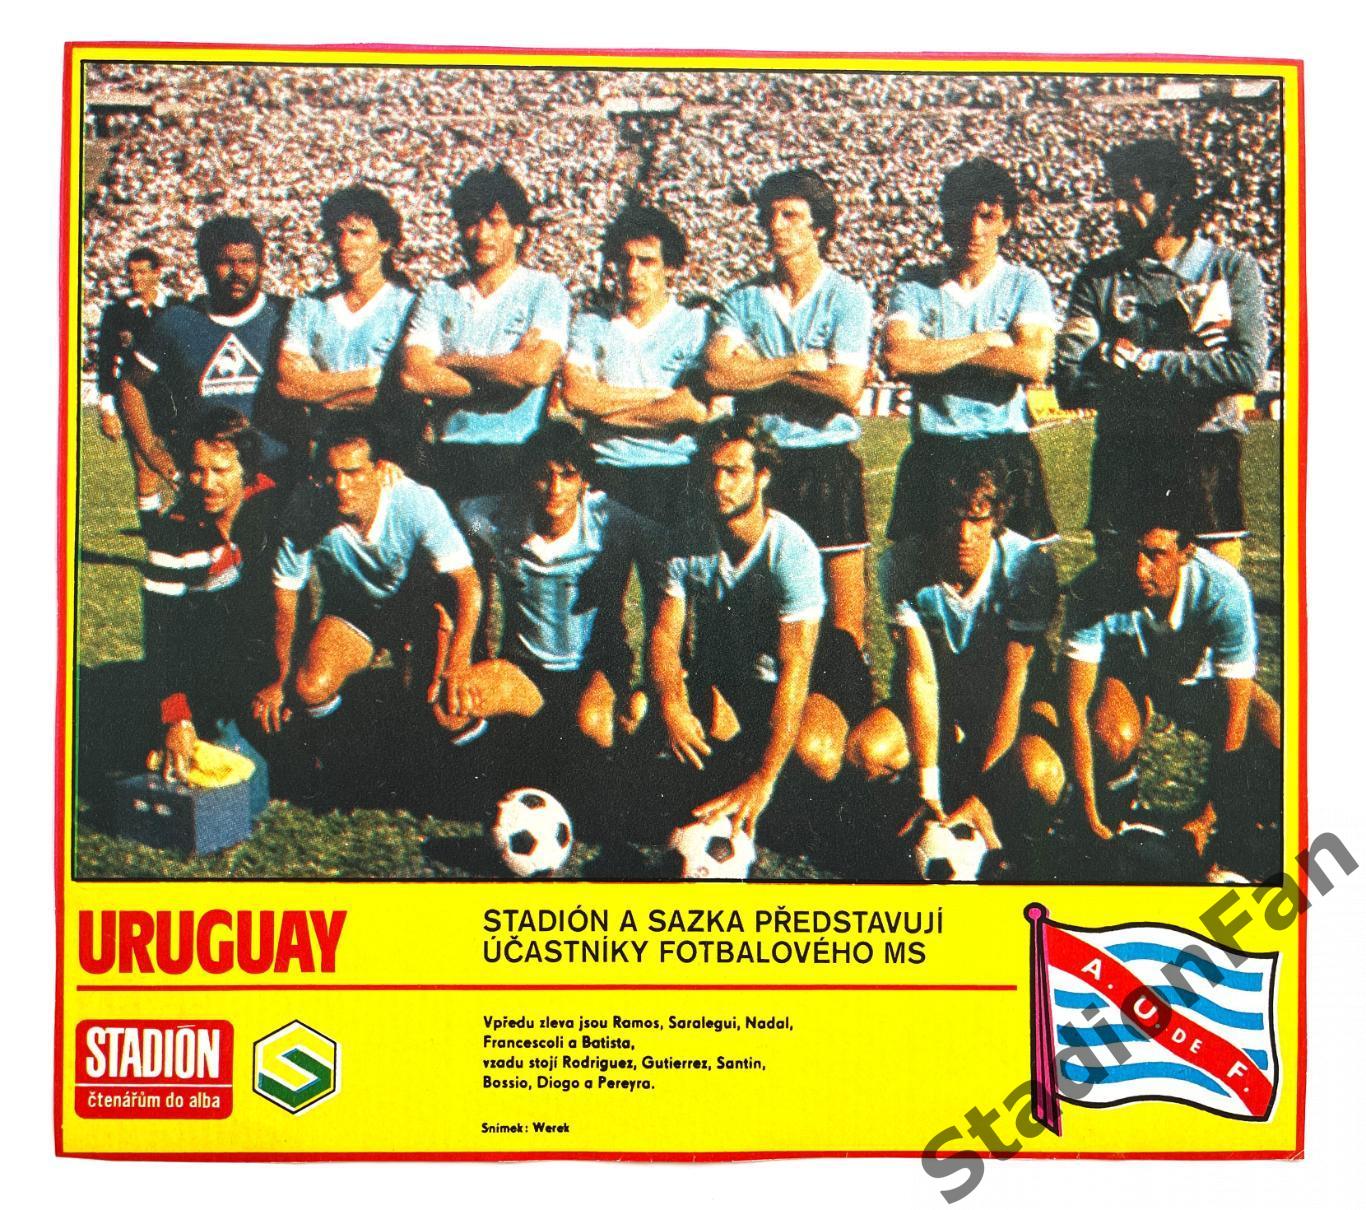 Постер из журнала Стадион (Stadion) - Uruguay, 1986